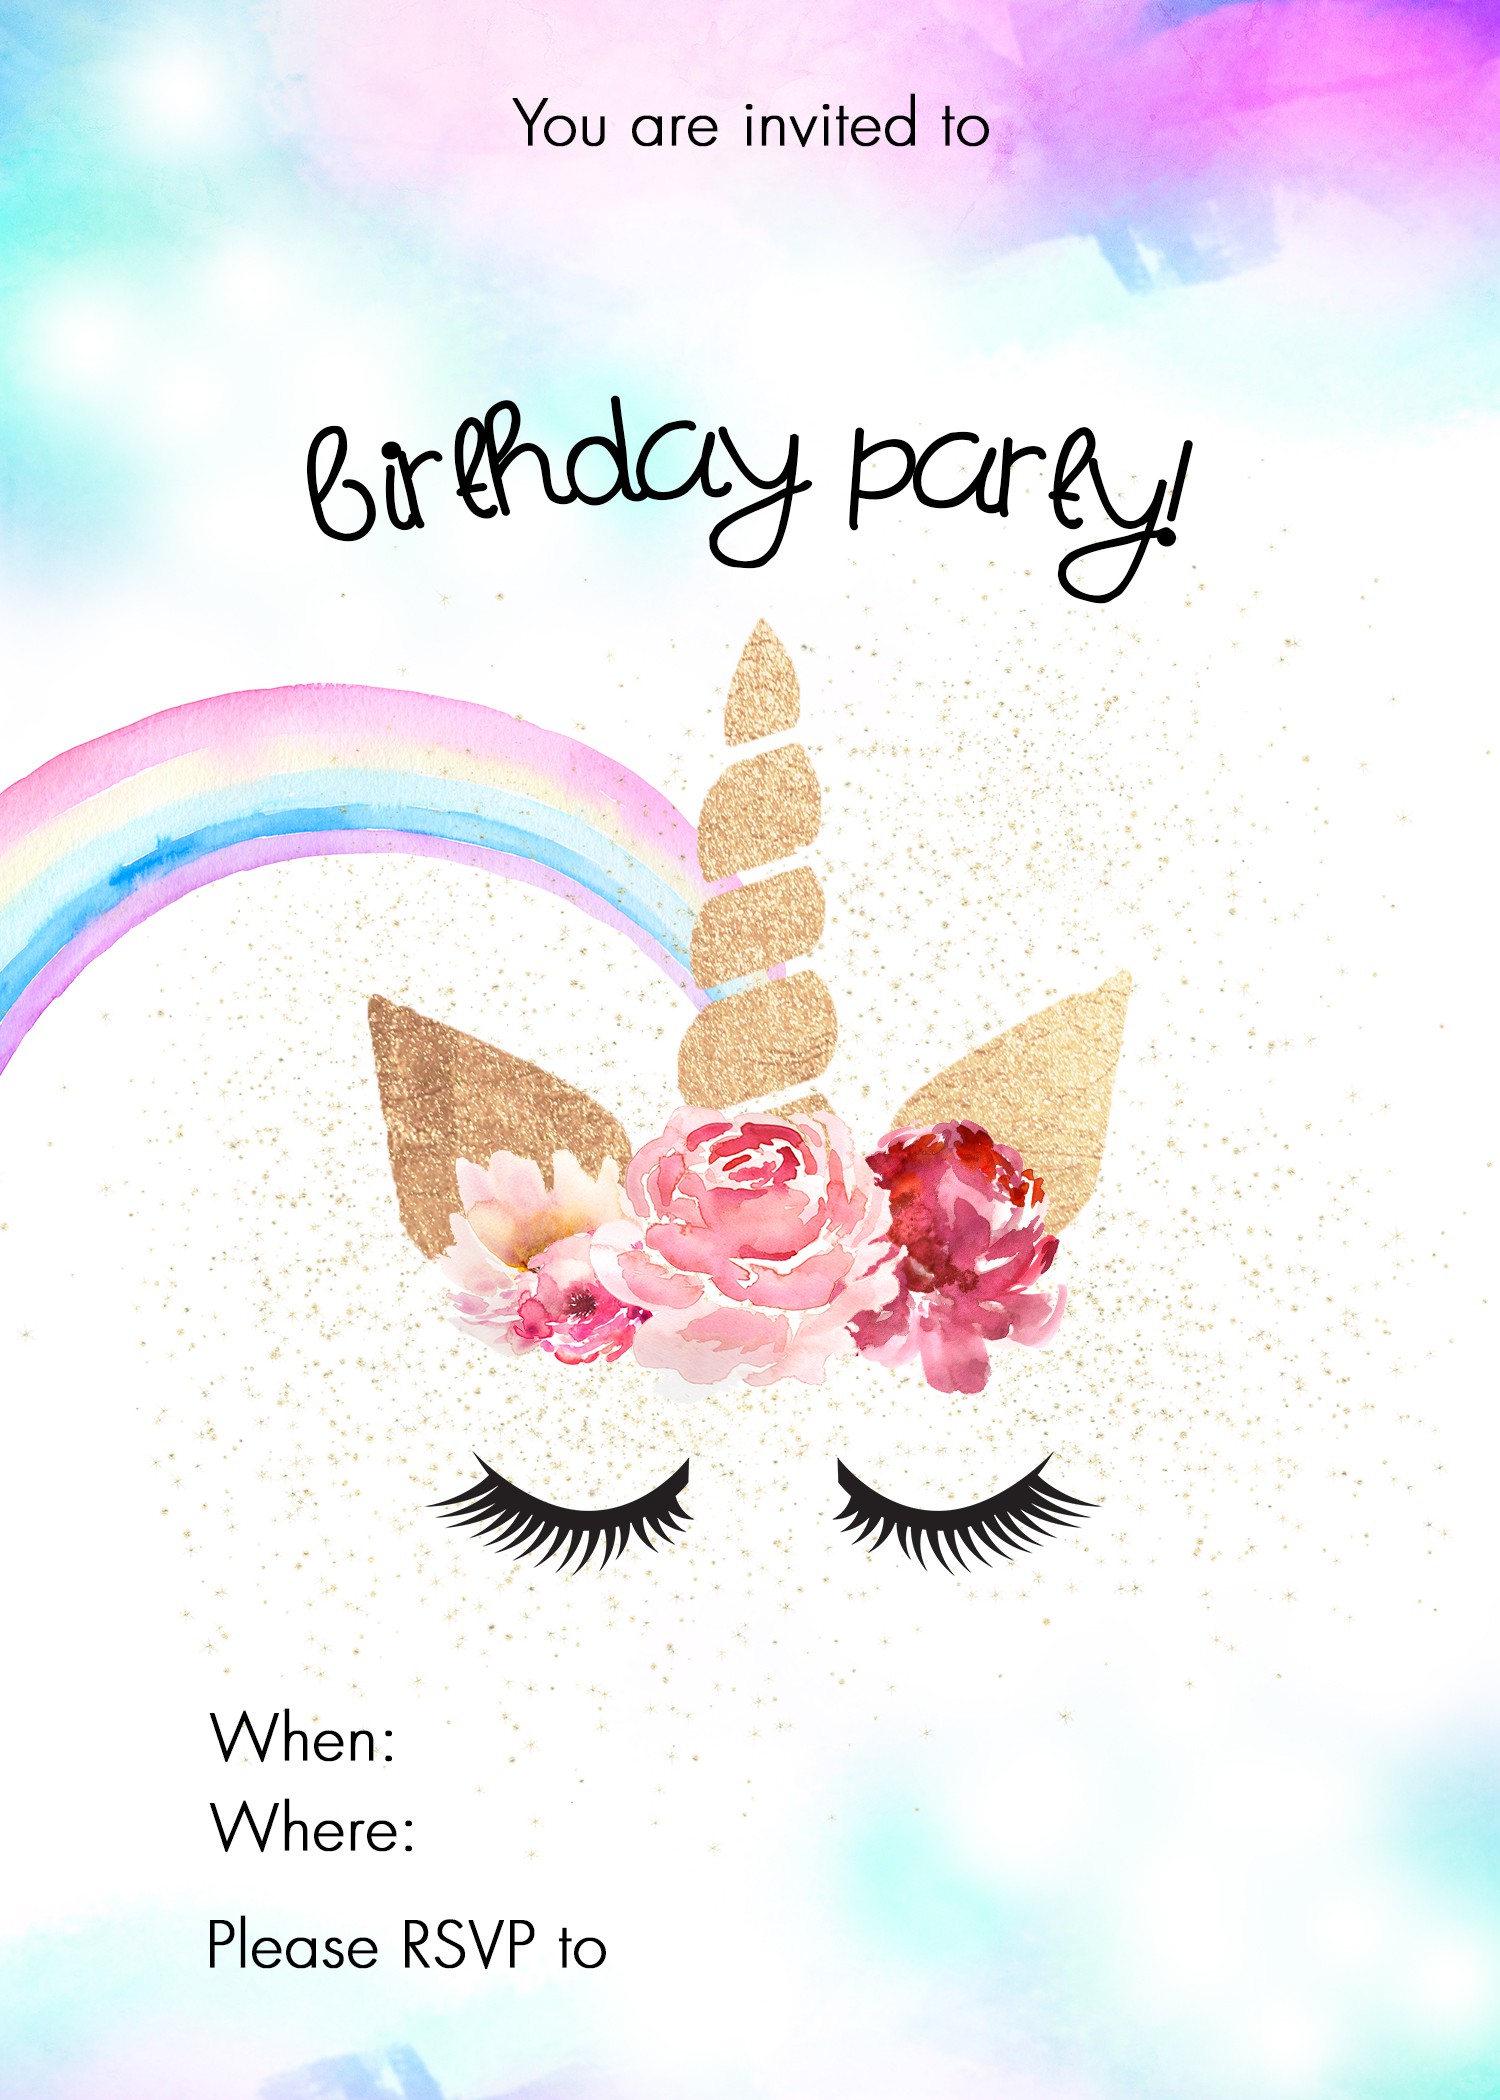 unicorn-birthday-party-invitation-blank-the-diy-lighthouse